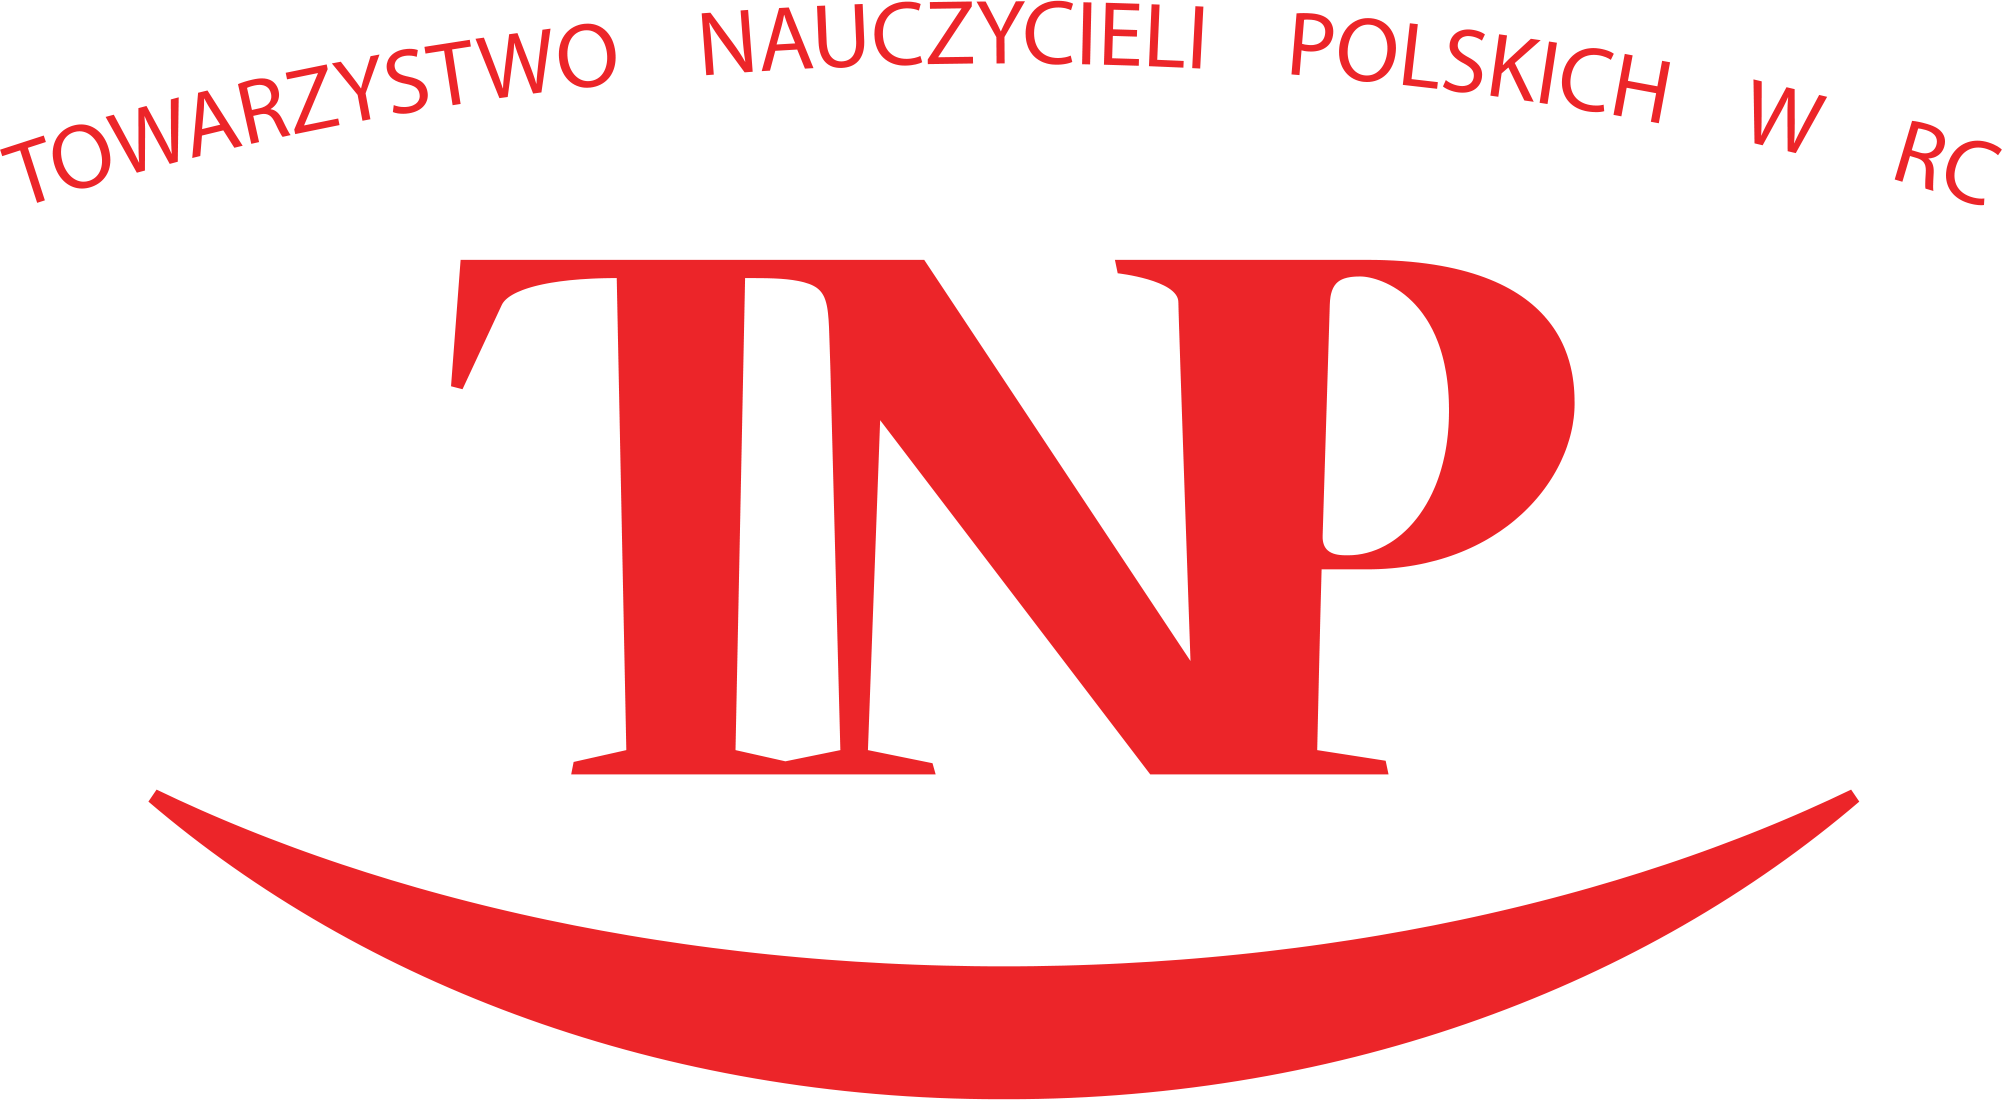 TNP logo